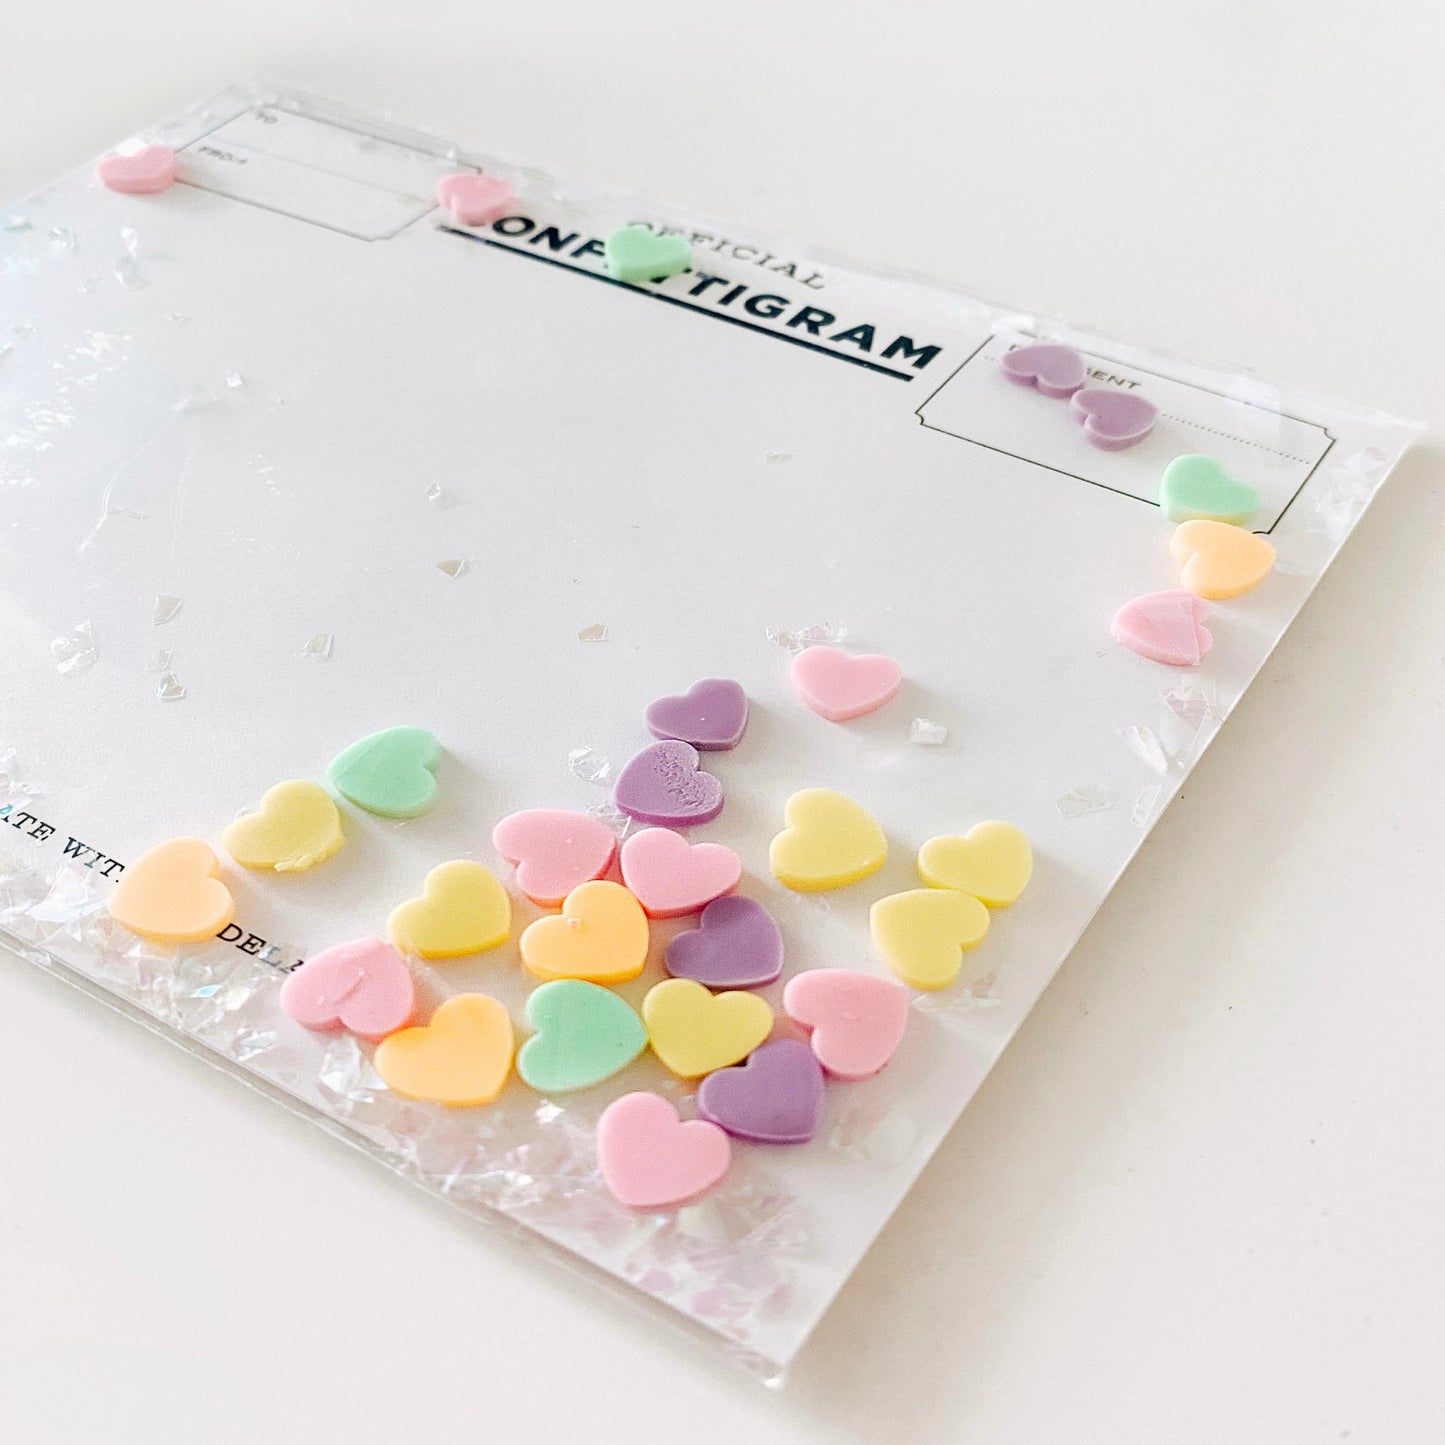 Confettigram Sweetheart Valentine Cards - Henry + Olives